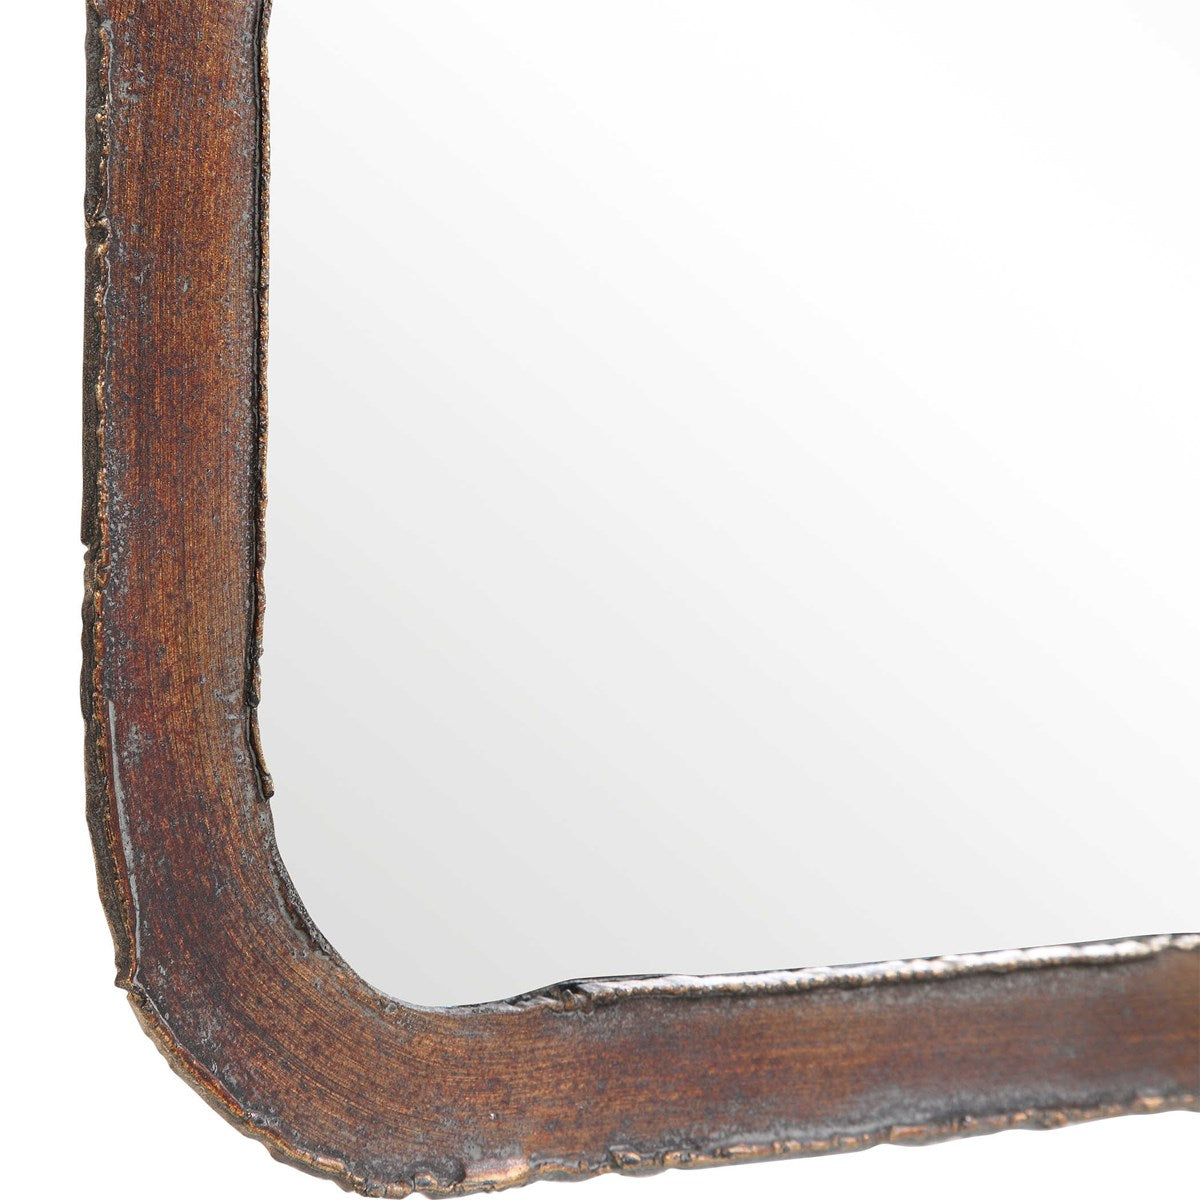 Oversize rustic mirror